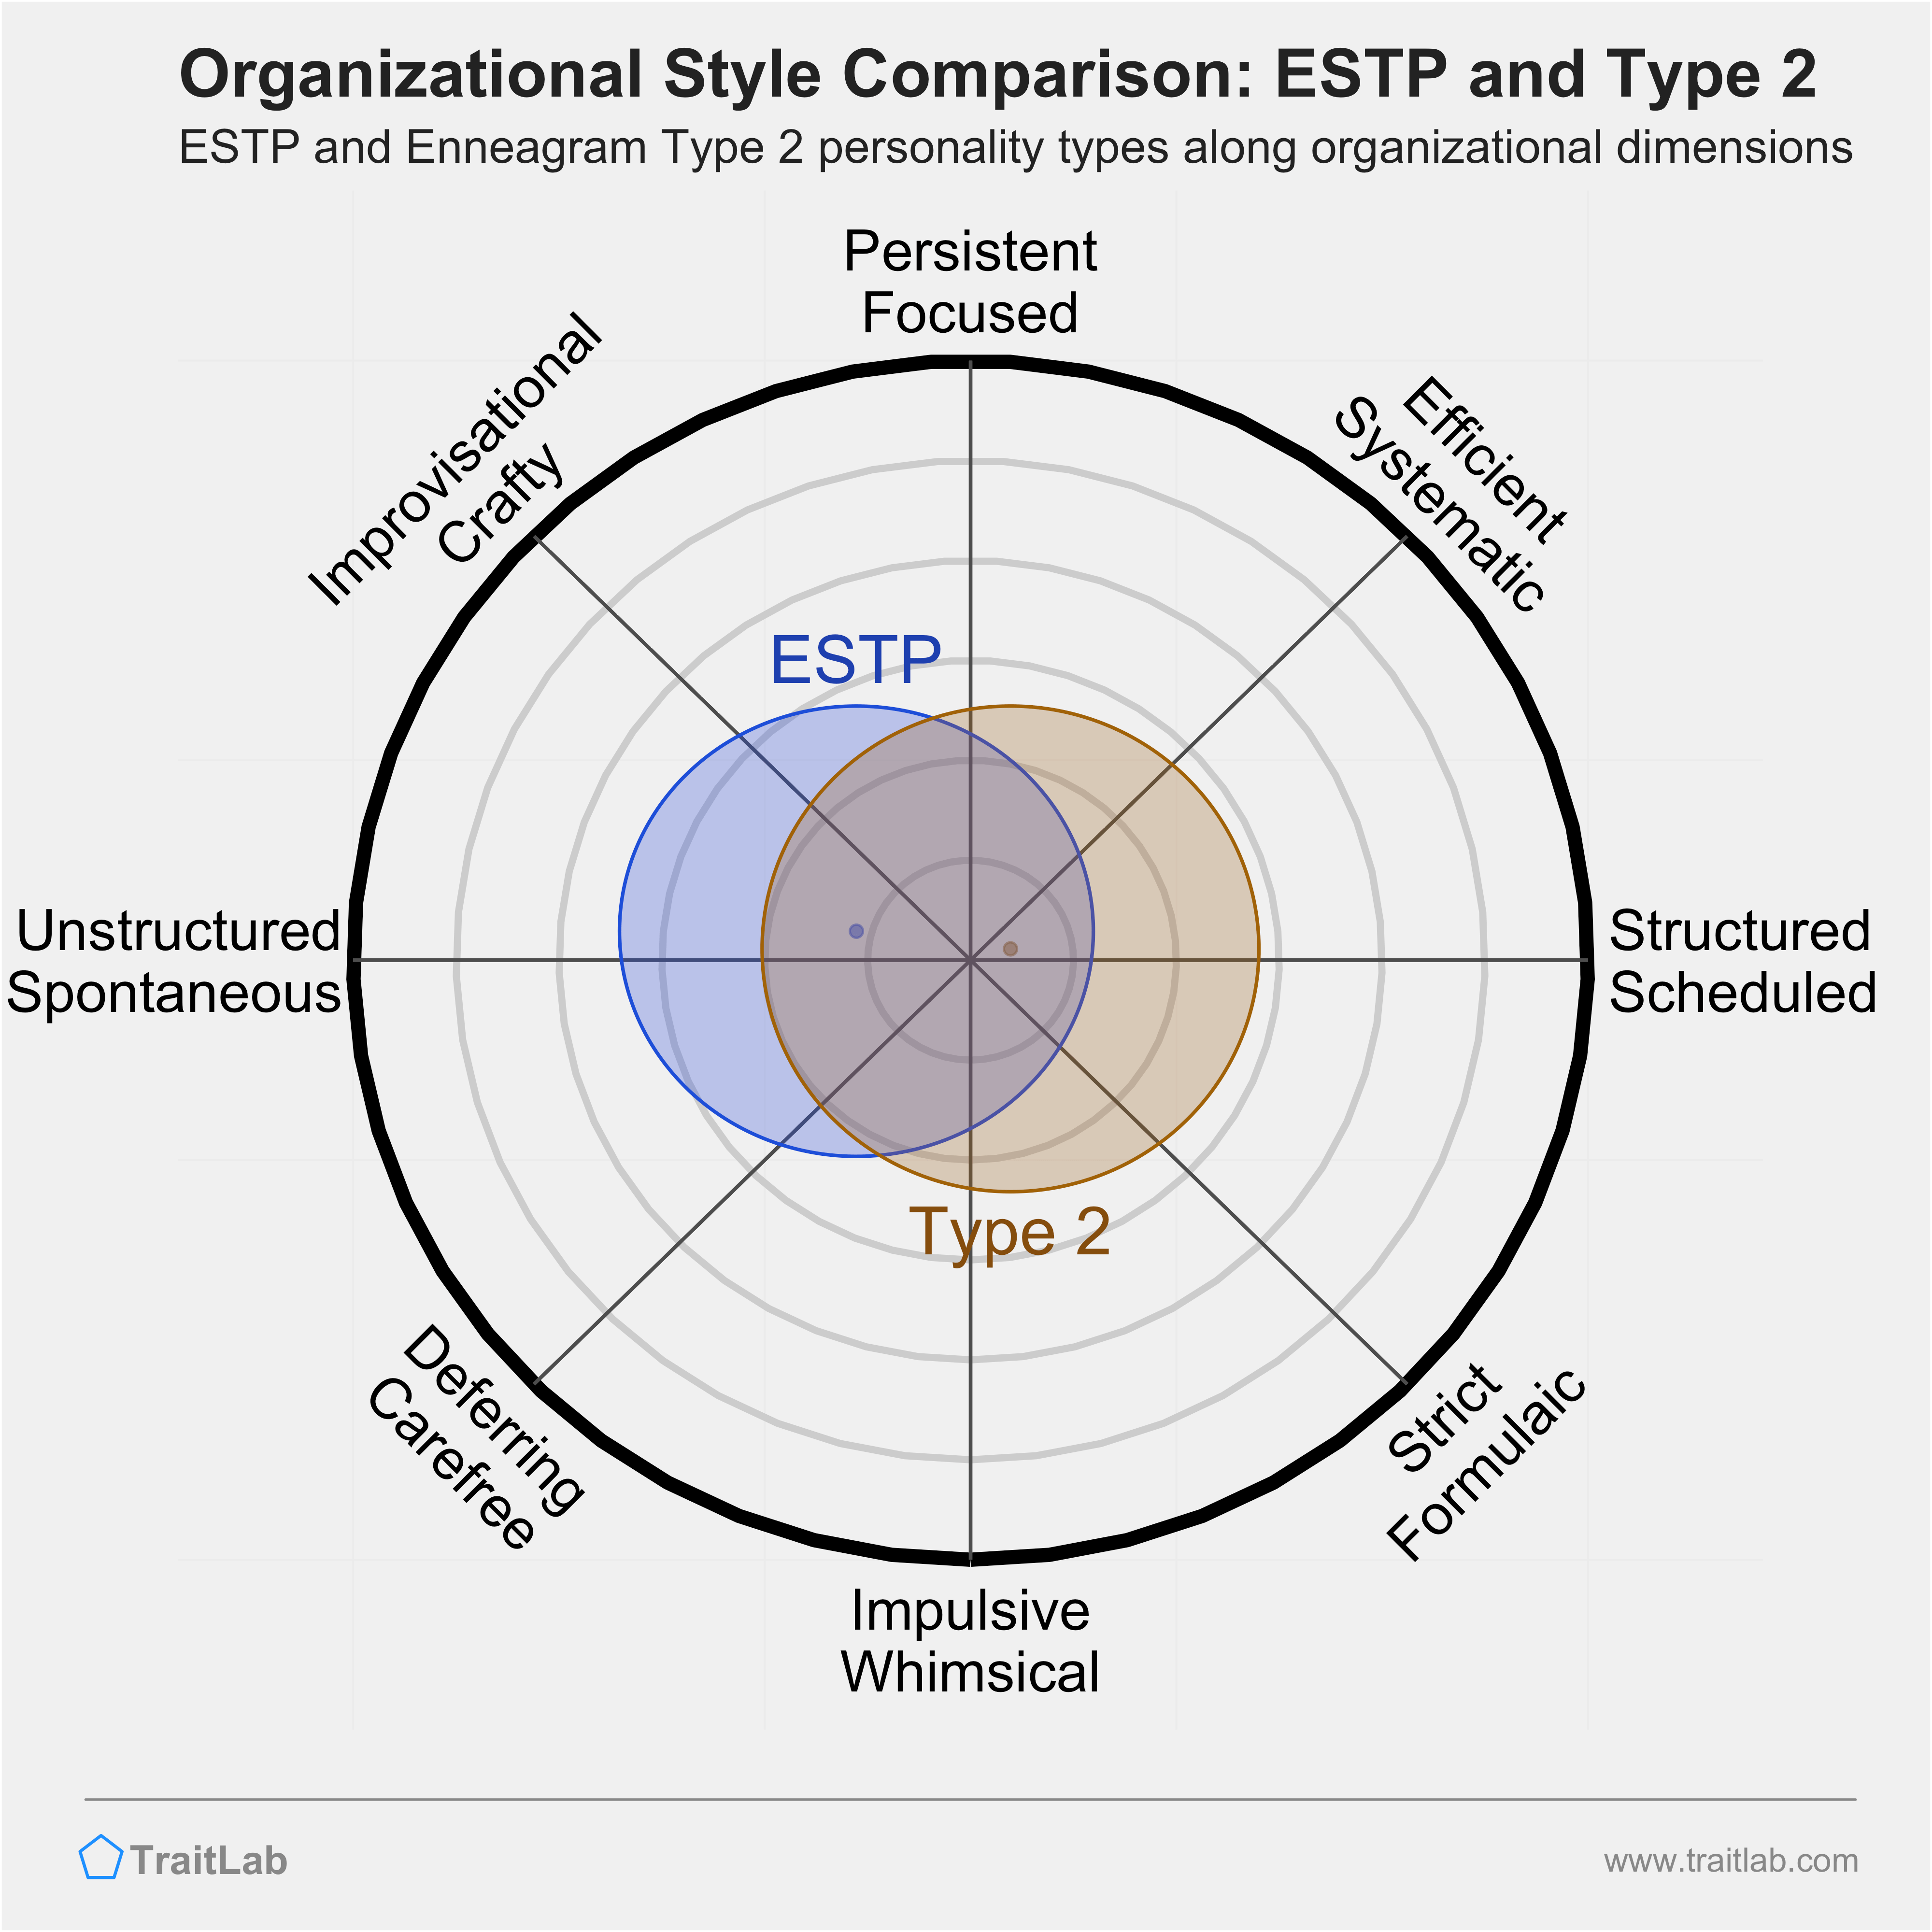 ESTP and Type 2 comparison across organizational dimensions